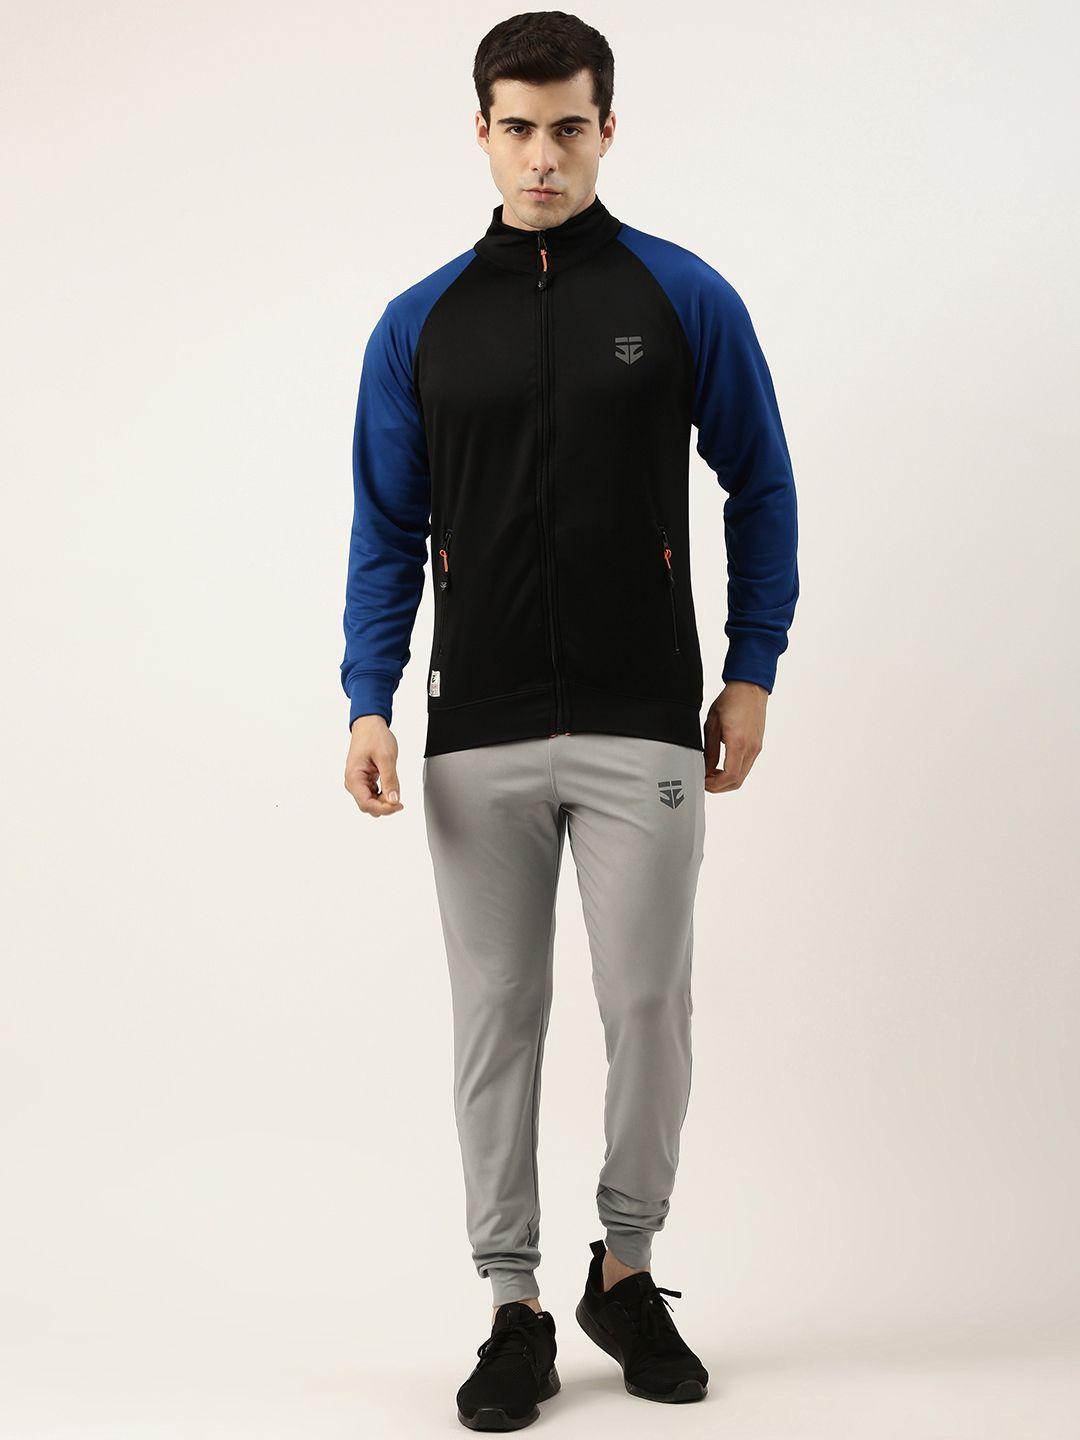 sports52 wear men colourblocked track jacket with joggers training tracksuit